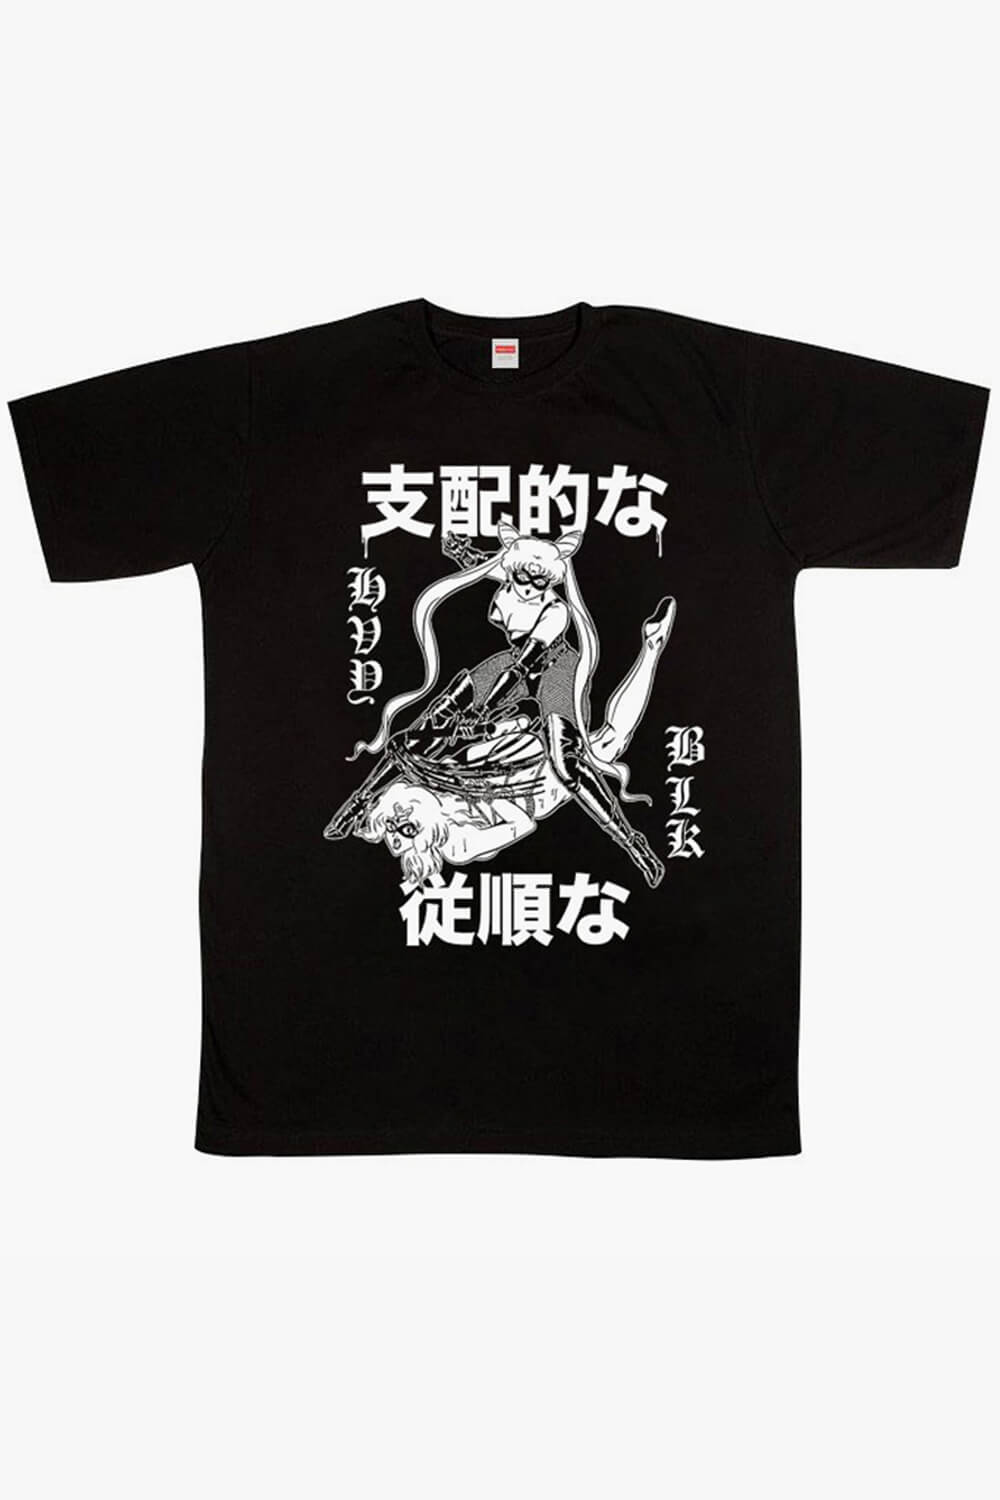 HVY BLK Dark Sailor Moon T-Shirt Bondagecore